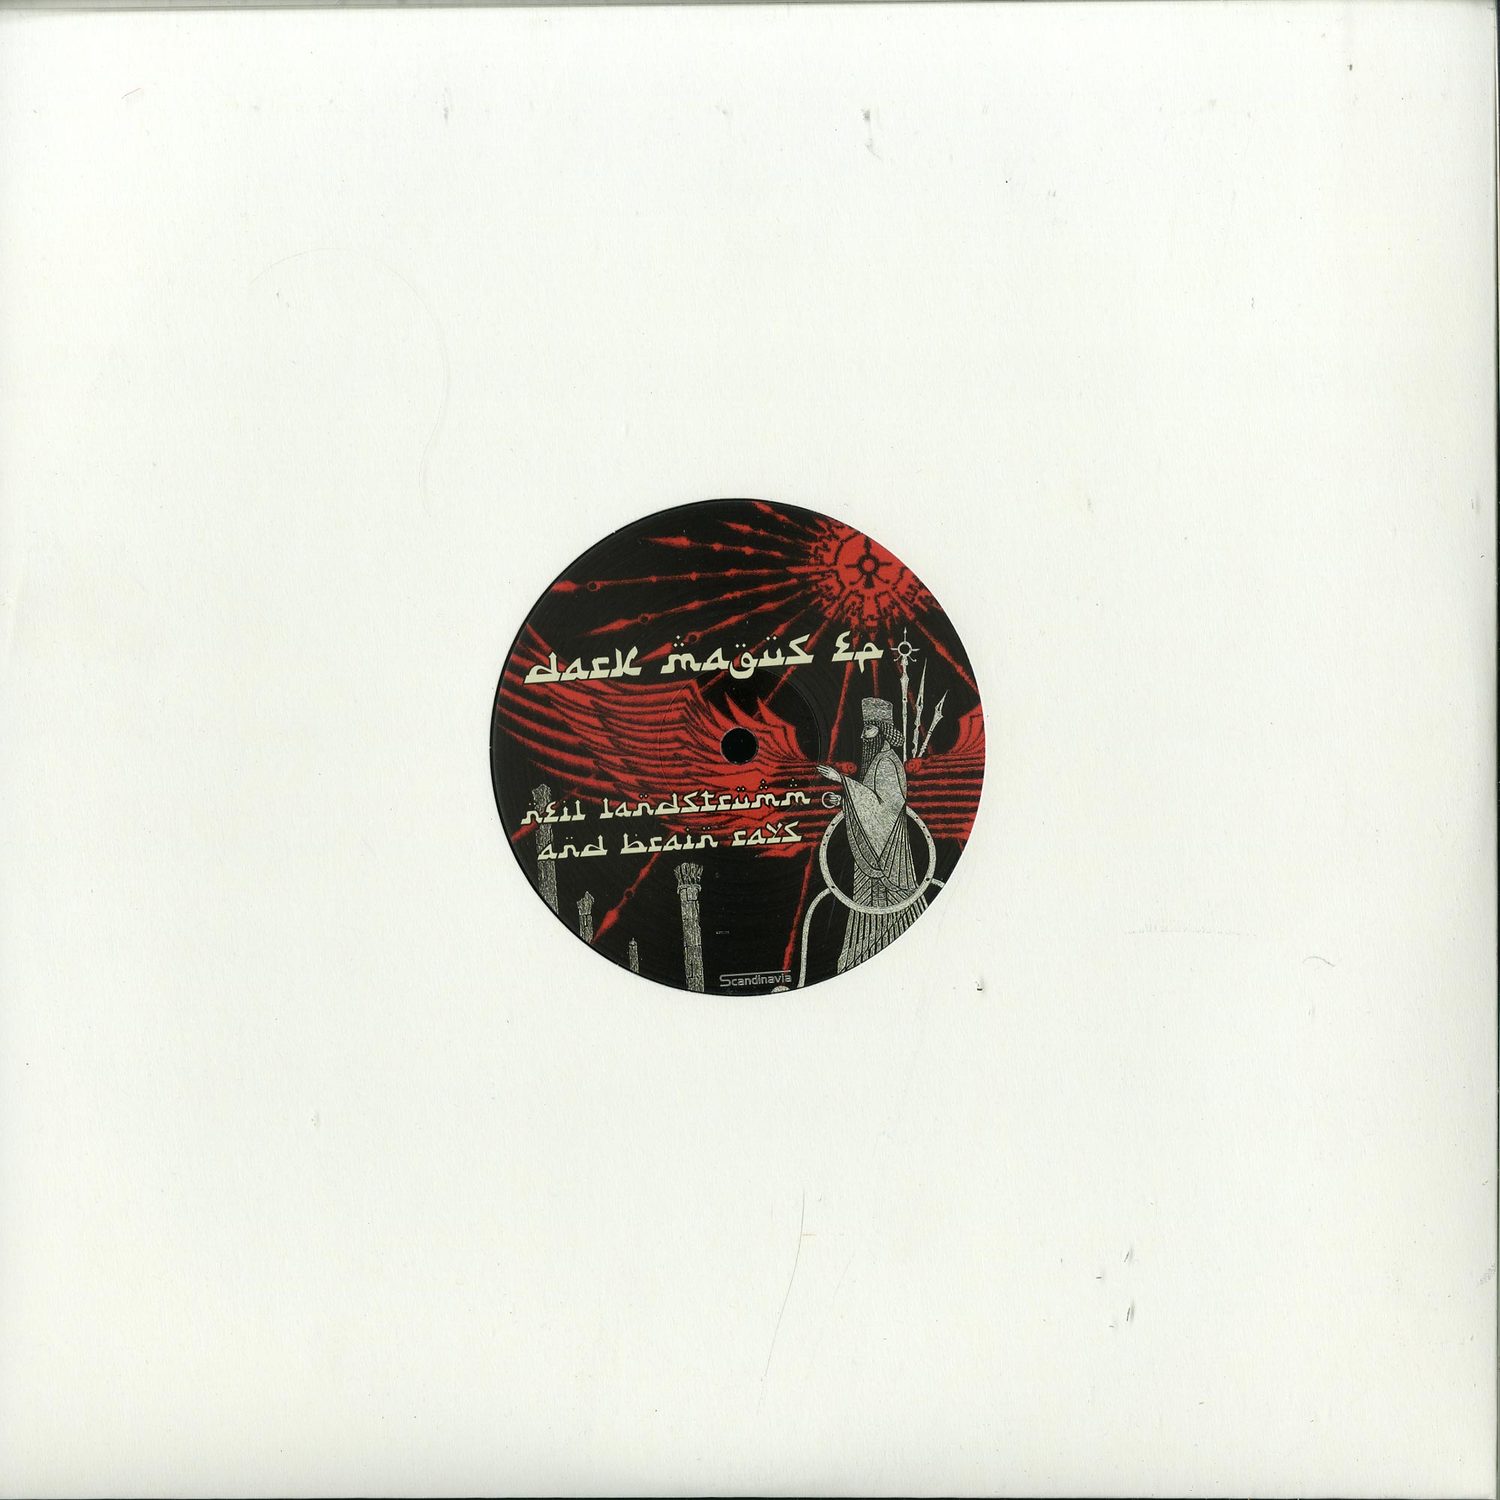 Neil Landstrumm & Brain Rays - DARK MAGUS EP